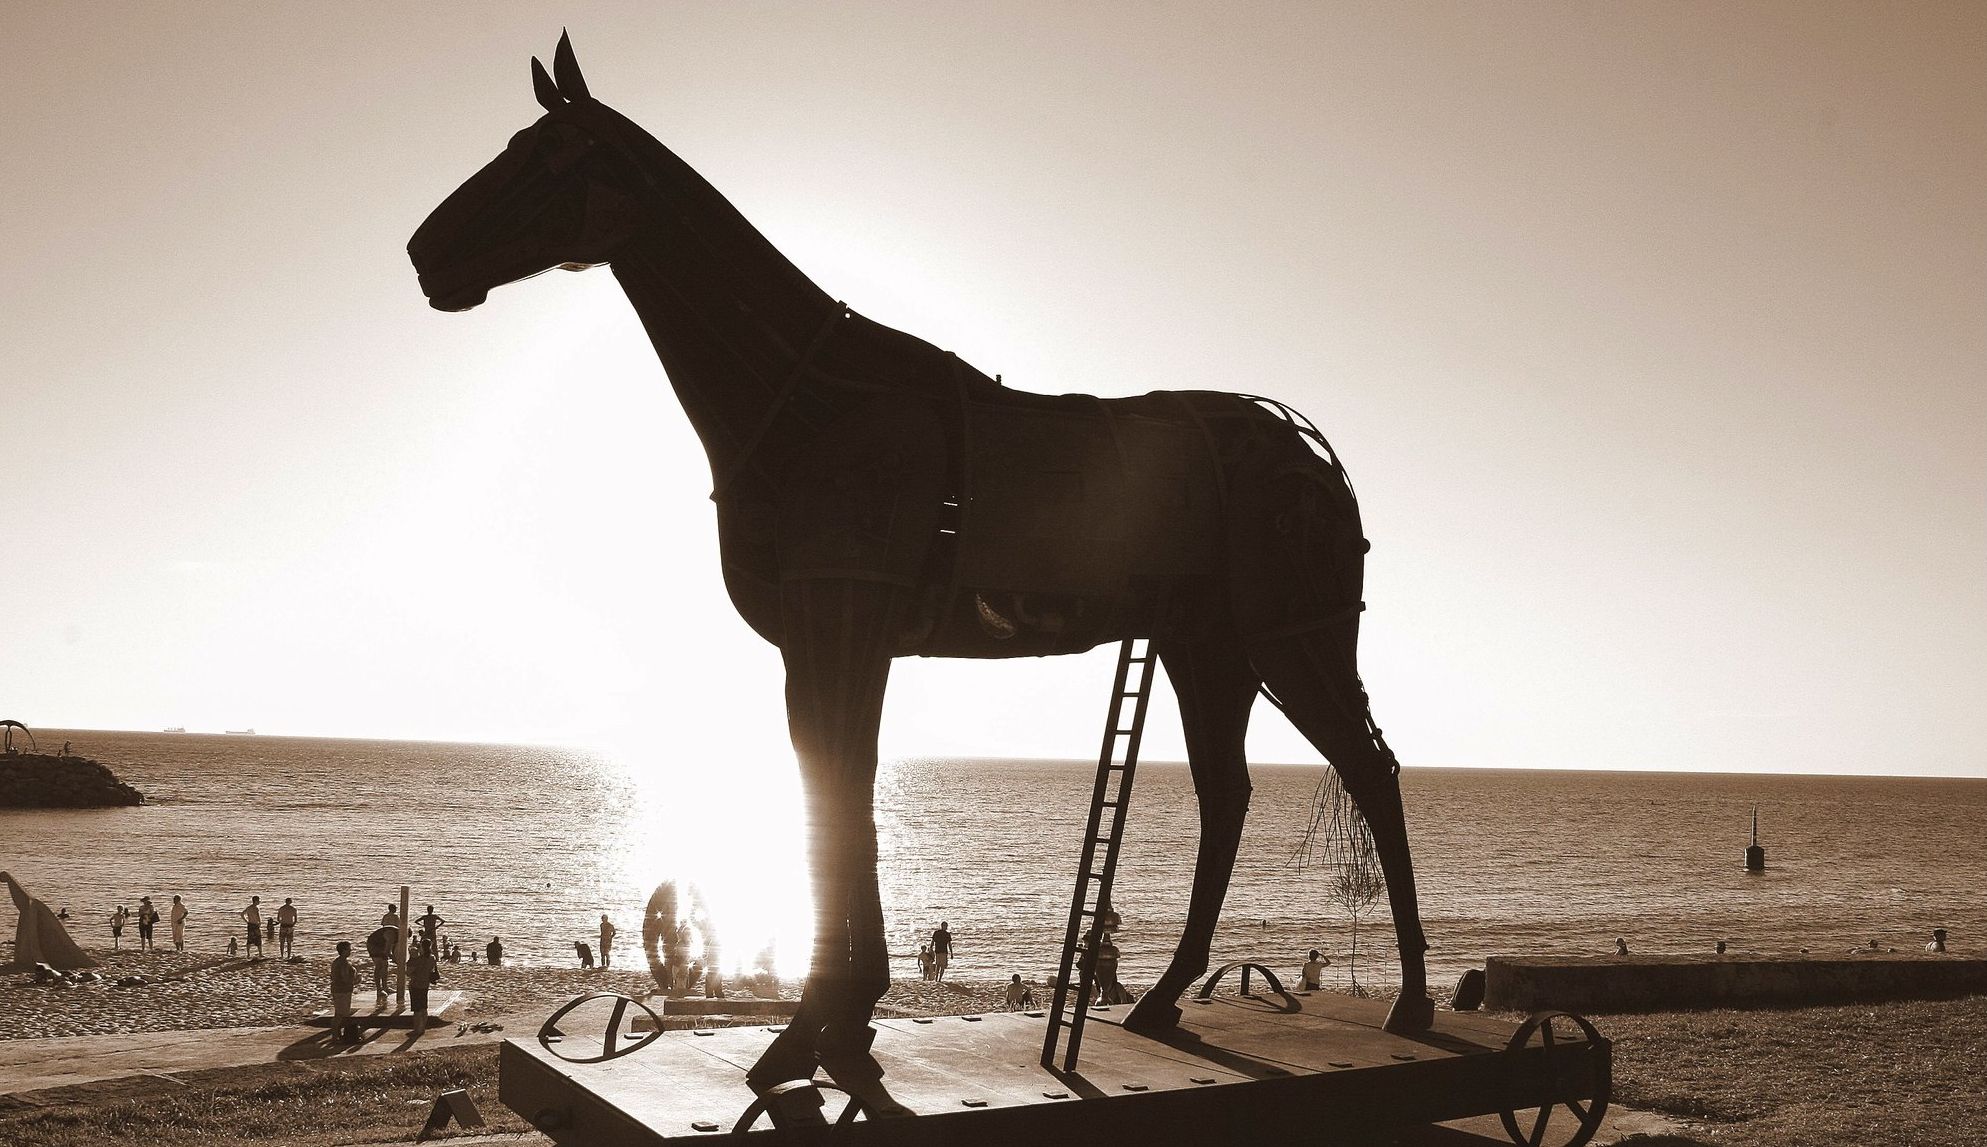 large trojan horse statue